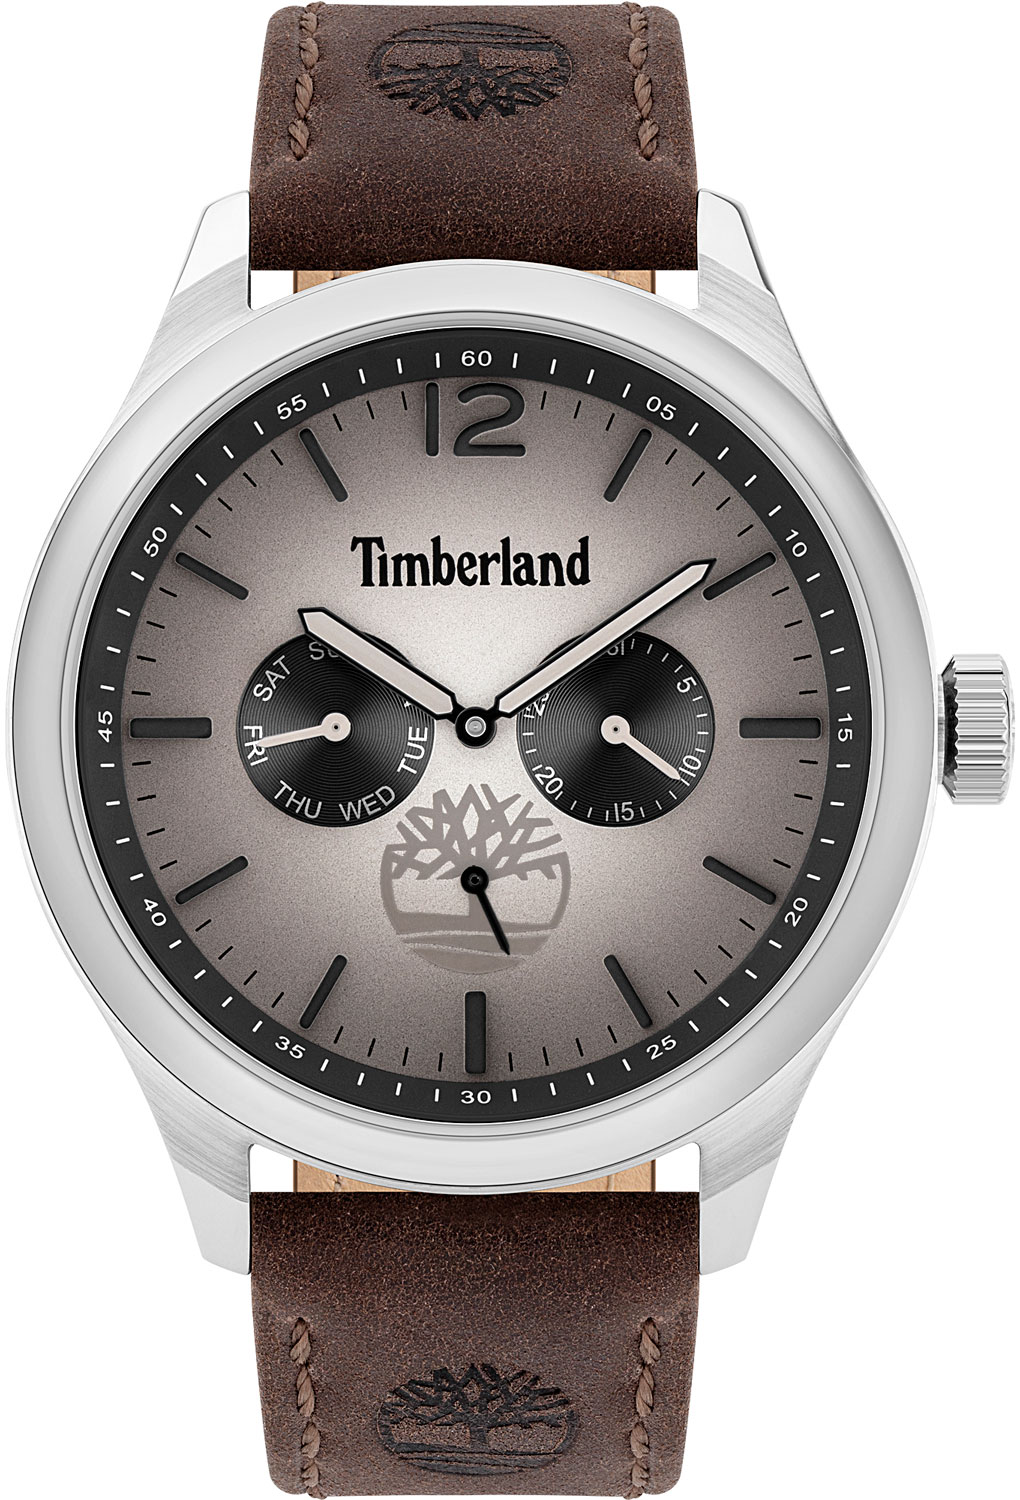 Фото - Мужские часы Timberland TBL.15940JS/79 женские часы timberland tbl 15960mytr 79